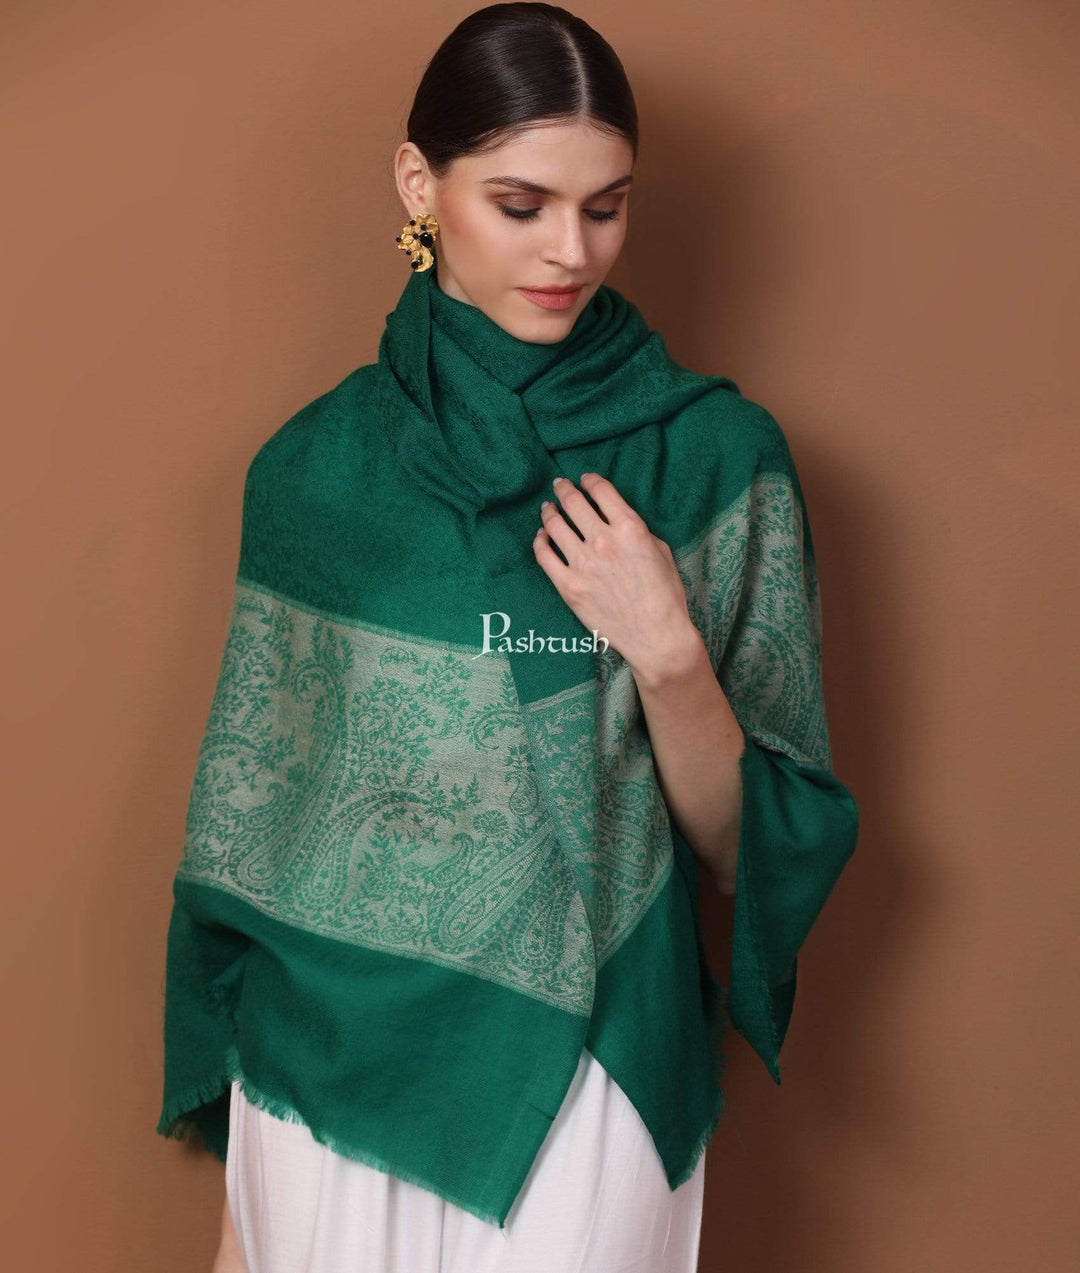 Pashtush India 70x200 Pashtush Womens Scarf with Chanting Paisleys Design, Soft and Warm, Emerald Green